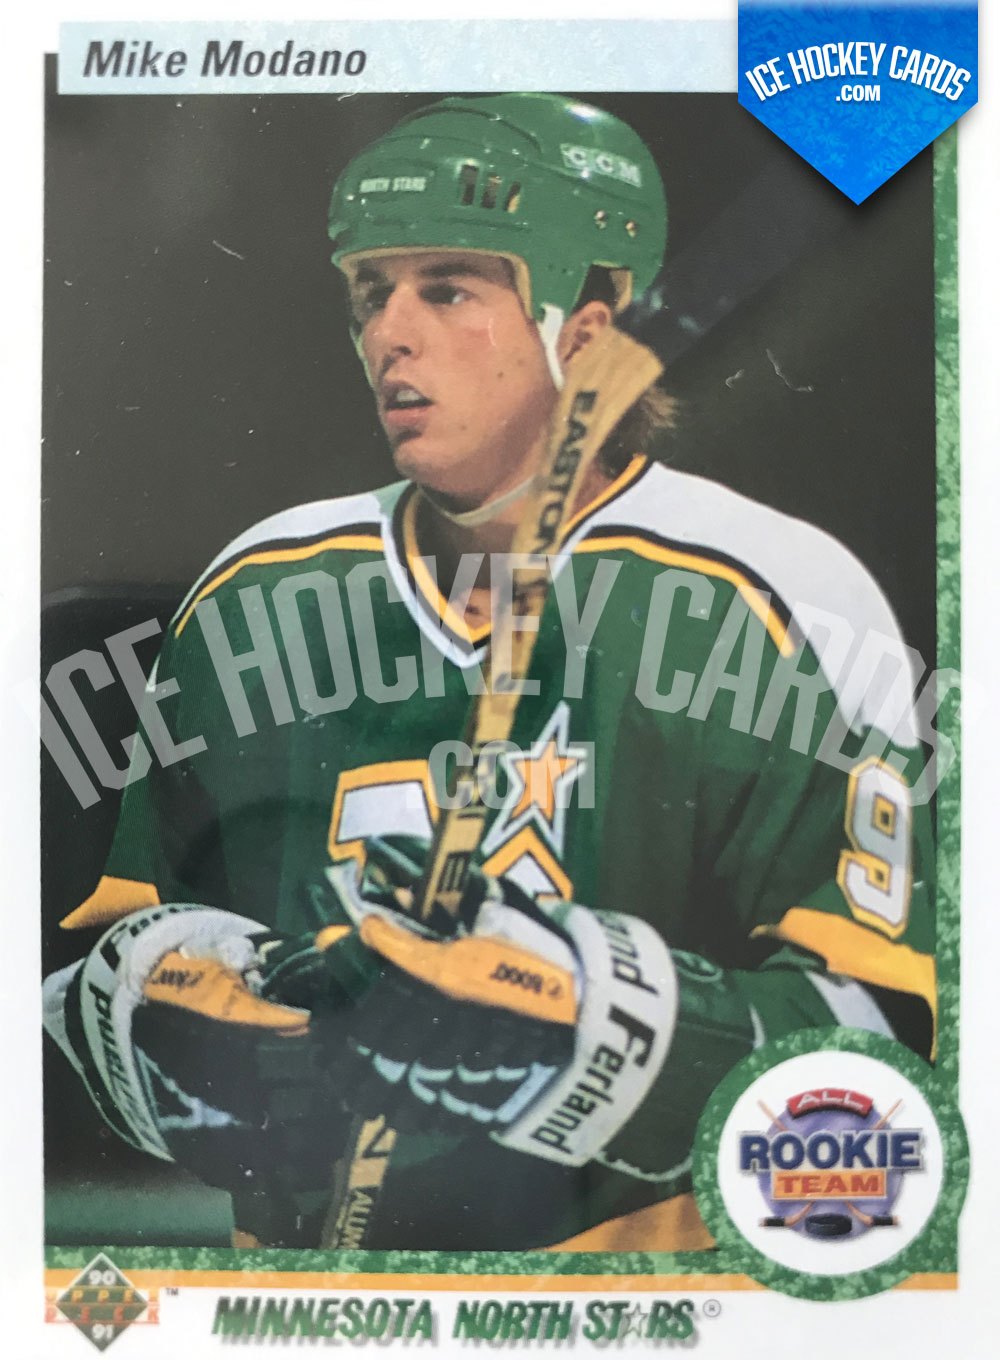 Dino Ciccarelli in the Minnesota North Stars uniform.  Minnesota north  stars, National hockey league, North star